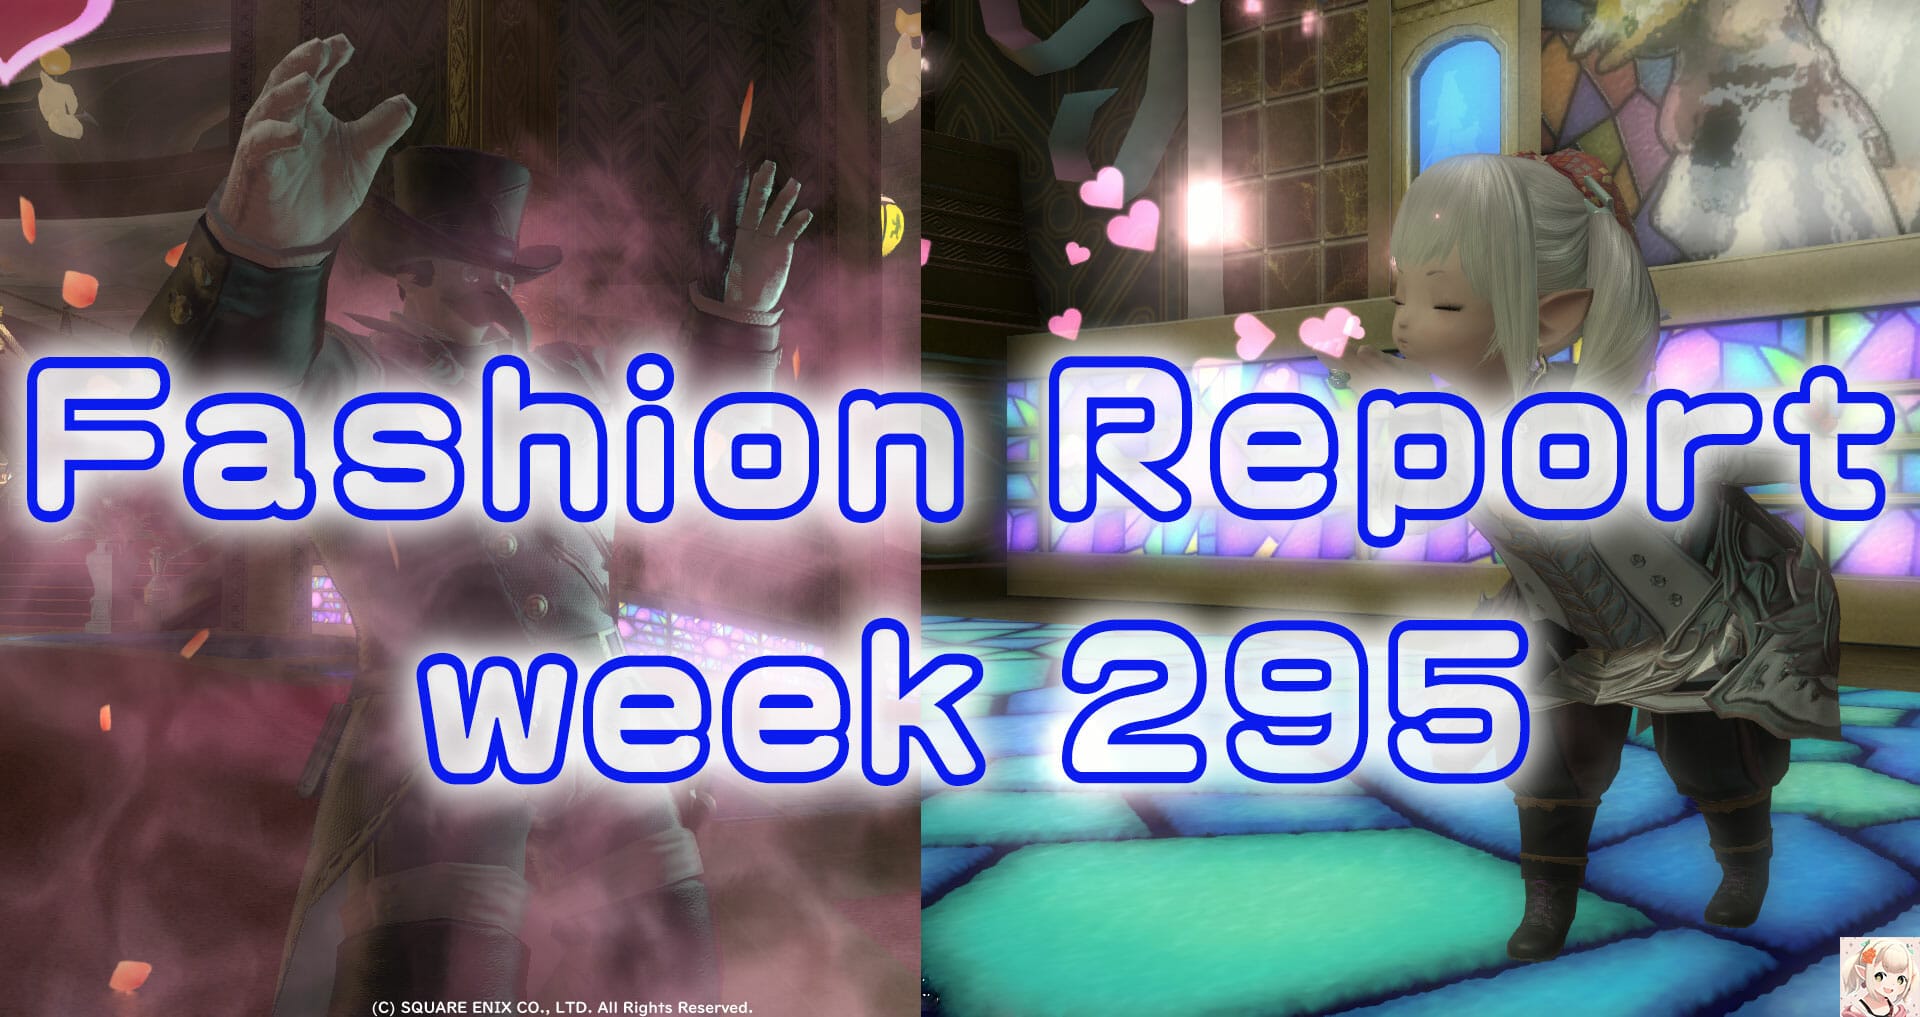 Fashion Report week 295